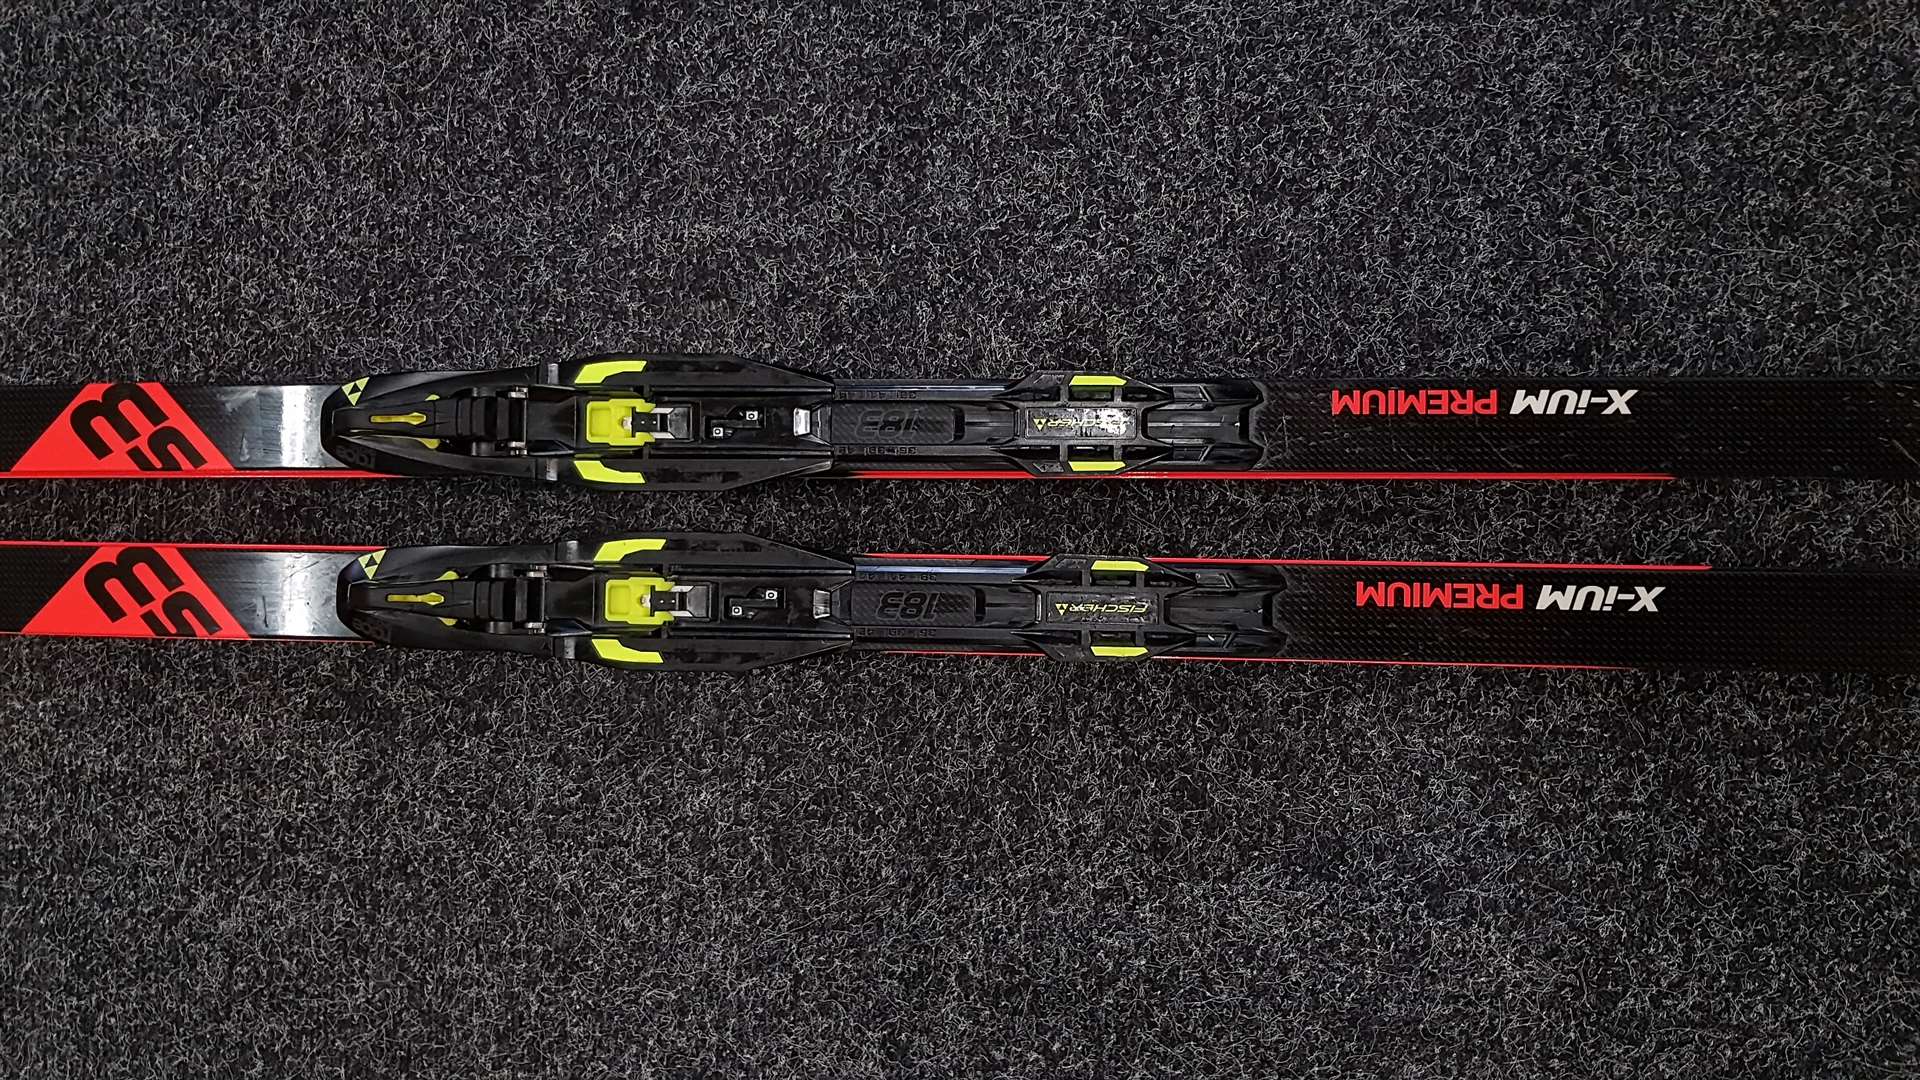 Bazárové bežecké lyže Rossignol S3 X-iUM